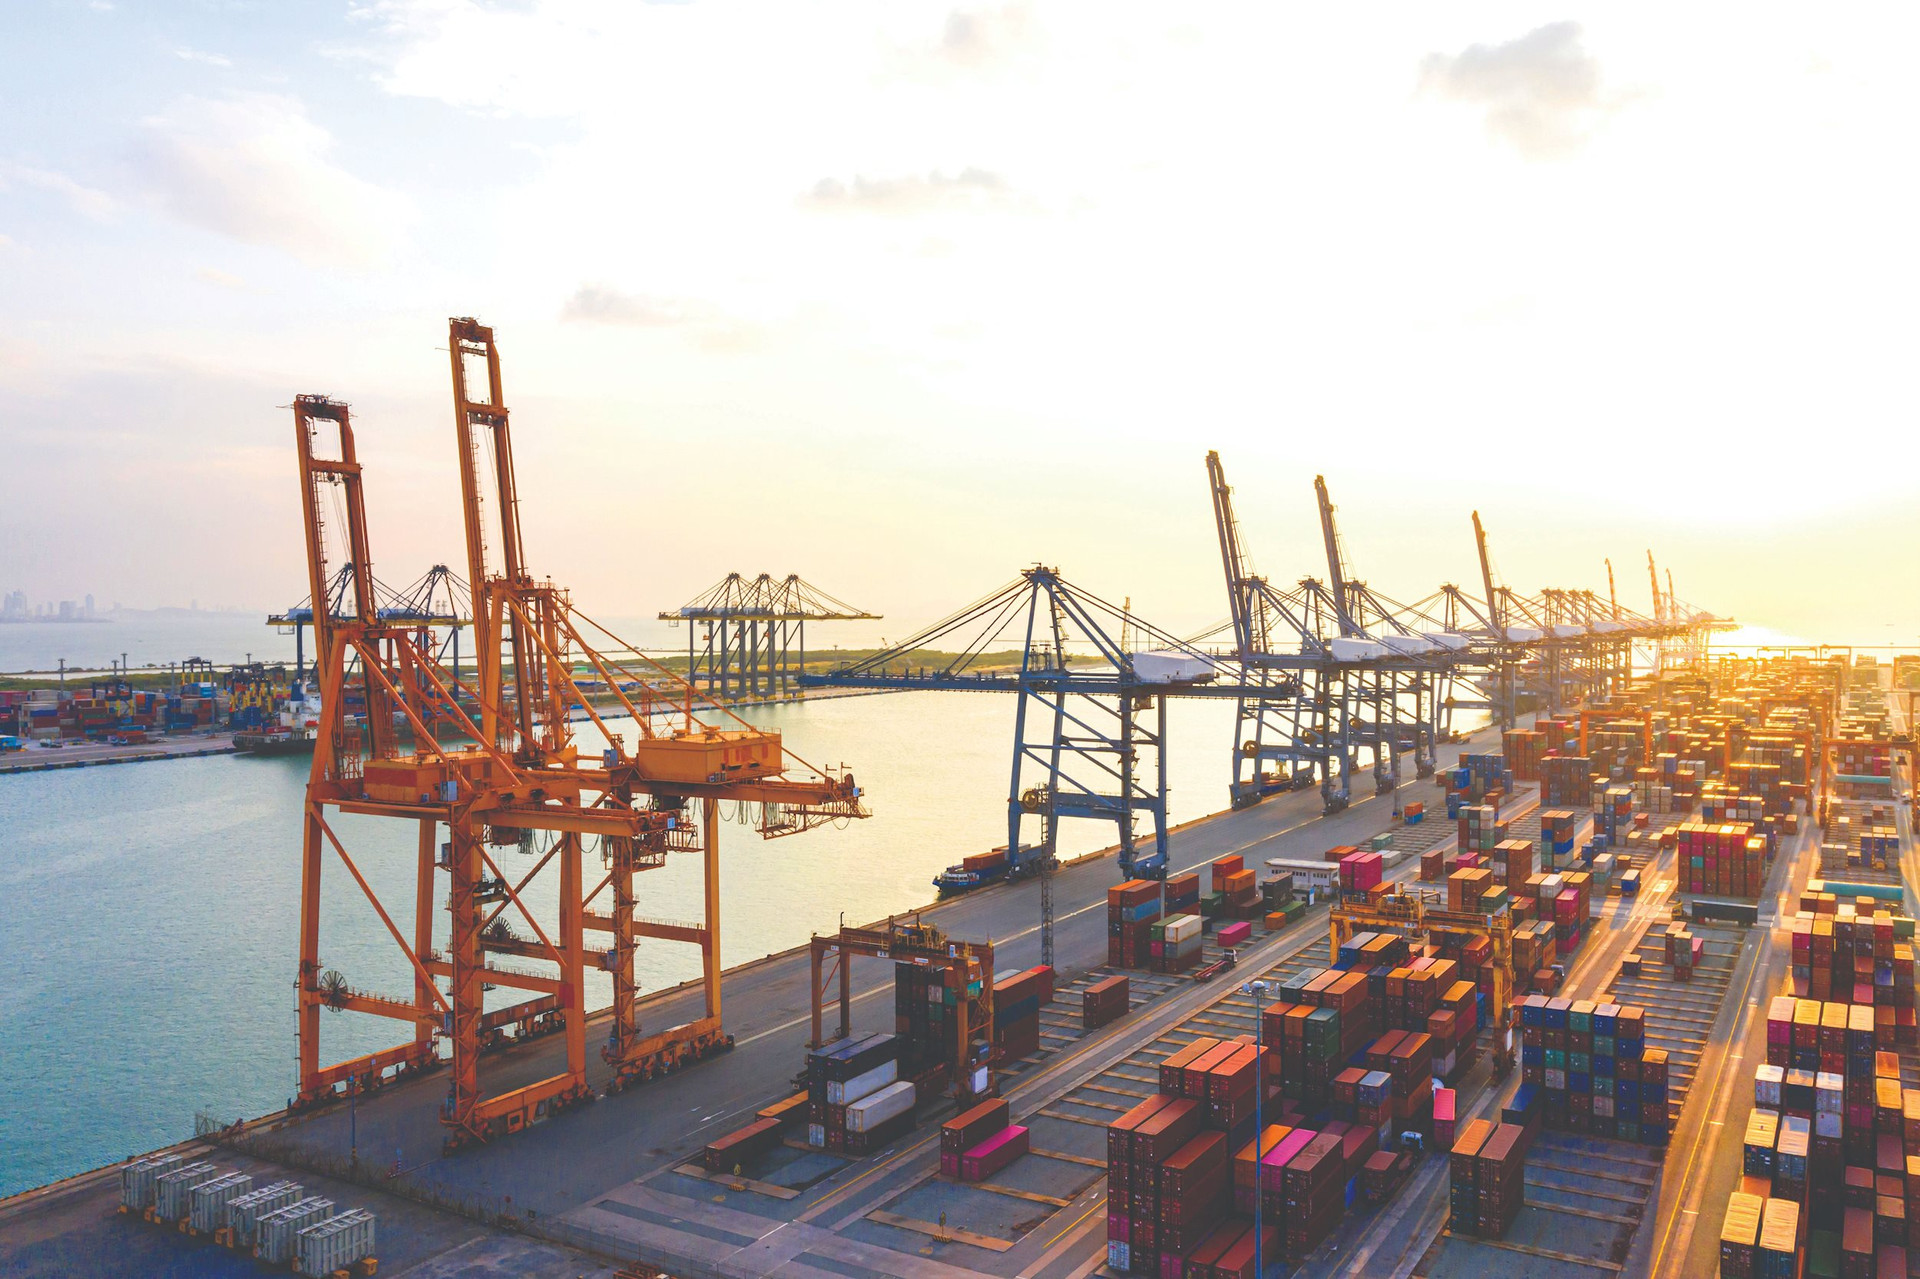 cargo-container-factory-harbor-industrial-estate-import-export-around-world-trade-port-compressed.jpg